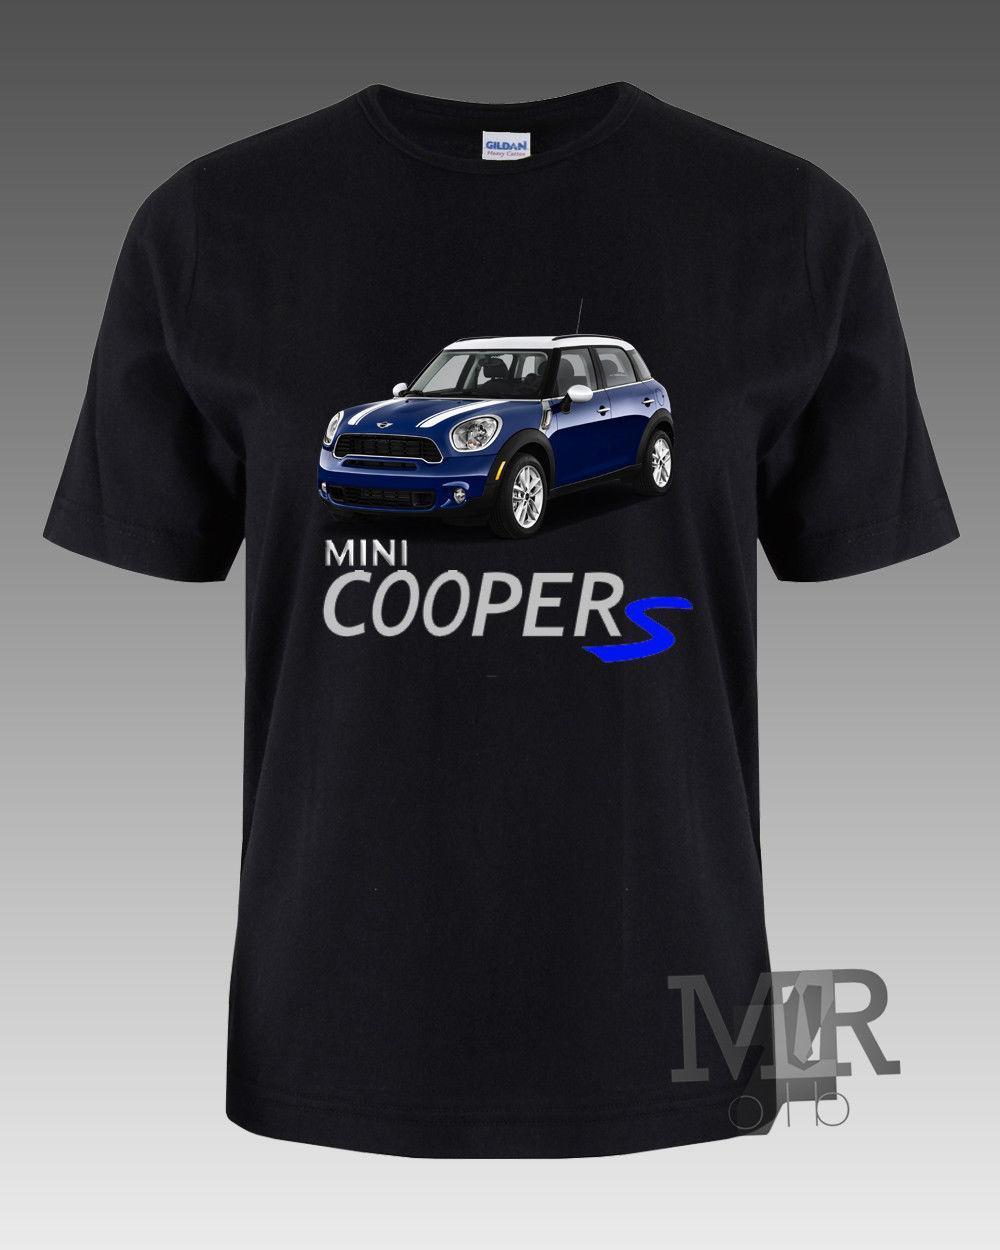 New Mini Cooper Logo - New Mini Cooper Blue Car Logo Black T Shirt M L XL 2XL Cotton Brand